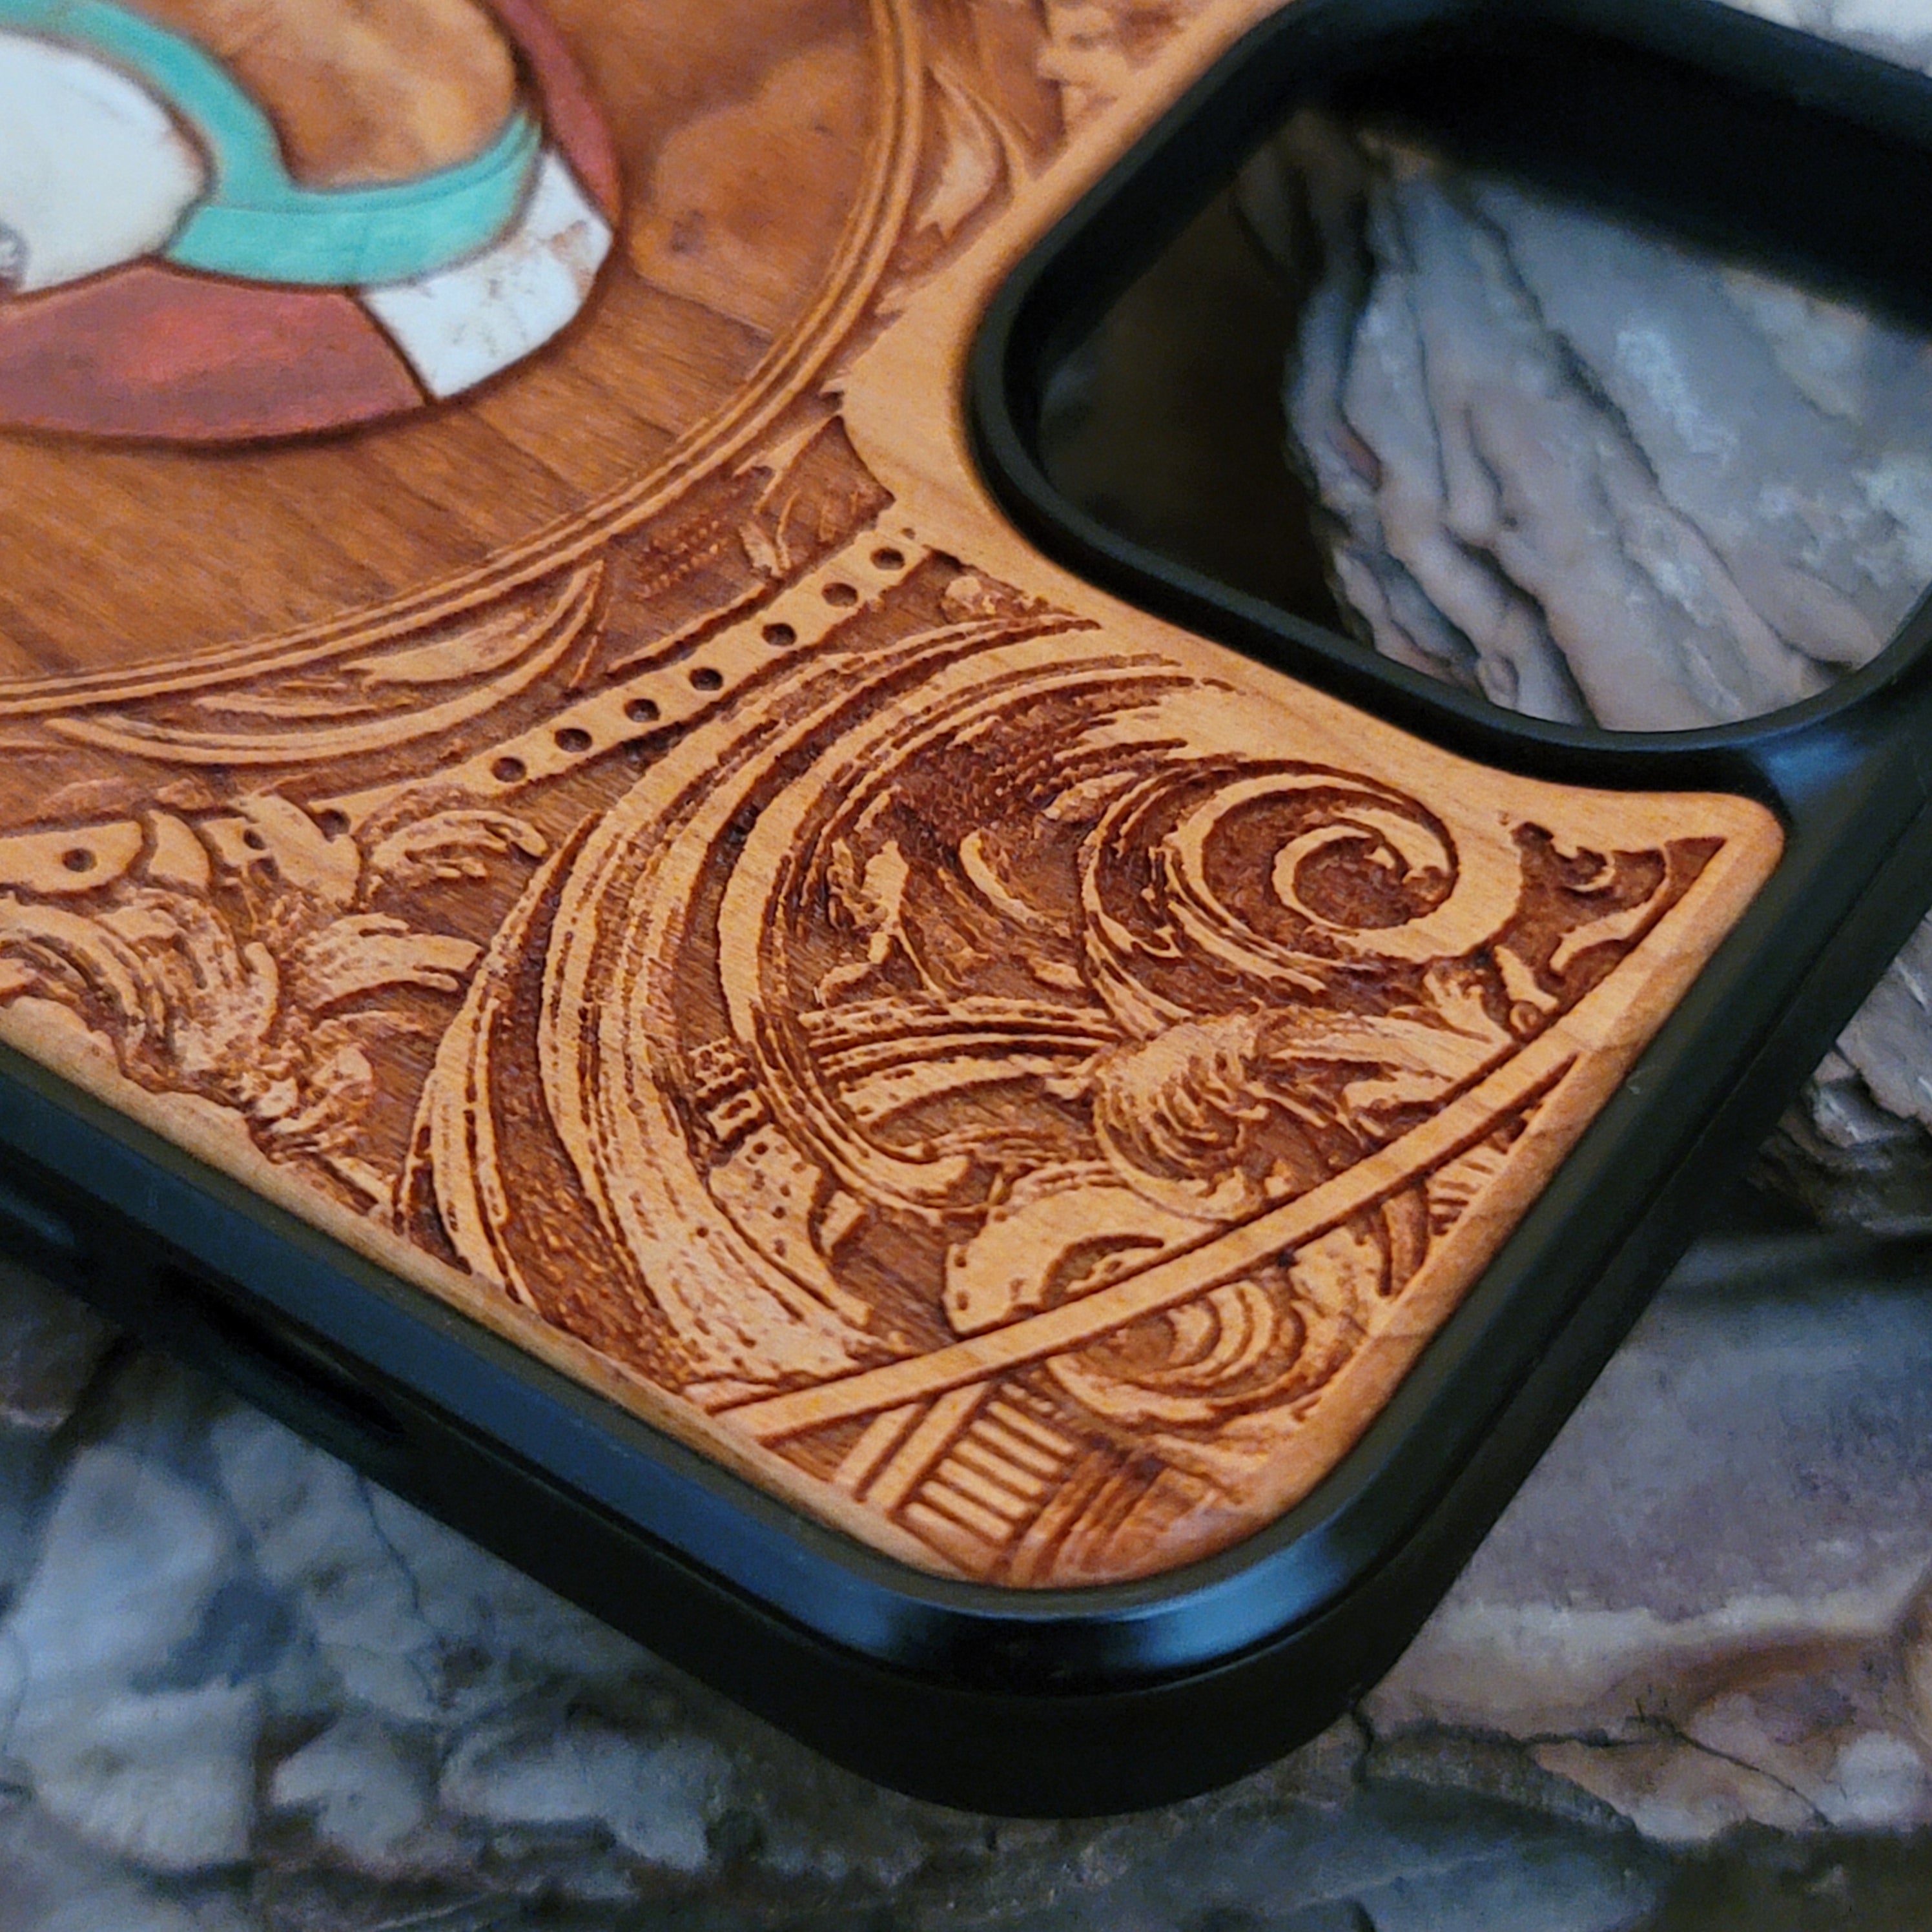 iPhone & Samsung Galaxy Wood Phone Case - Star Wars Artwork "Slave I" Hand Painted